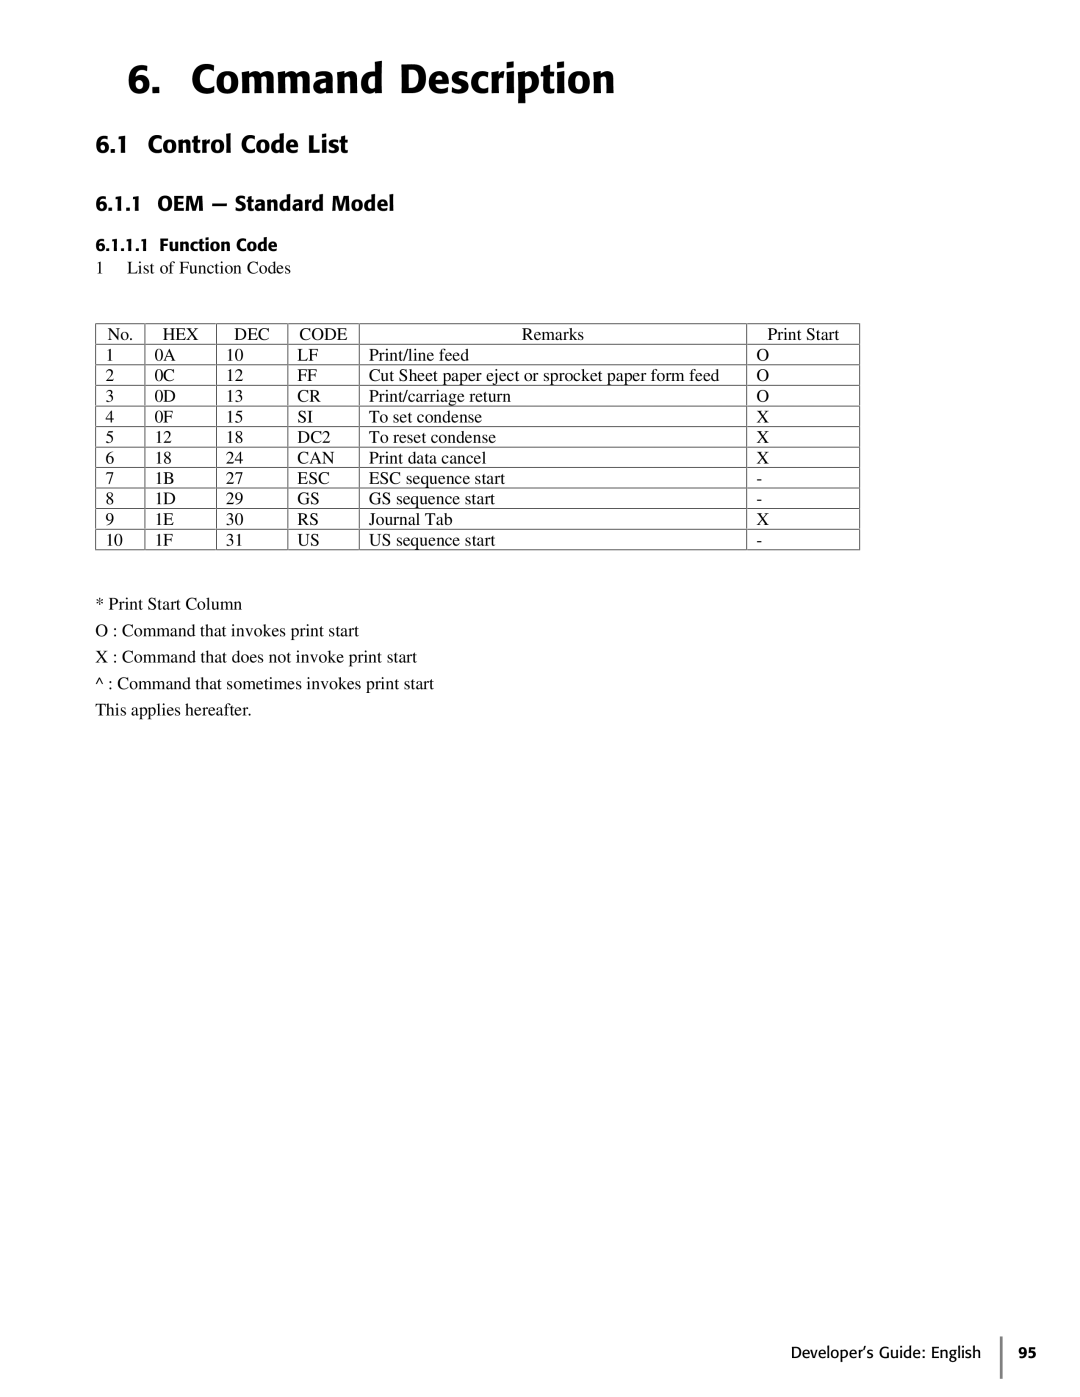 Oki 425D manual Command Description, Control Code List, OEM - Standard Model 